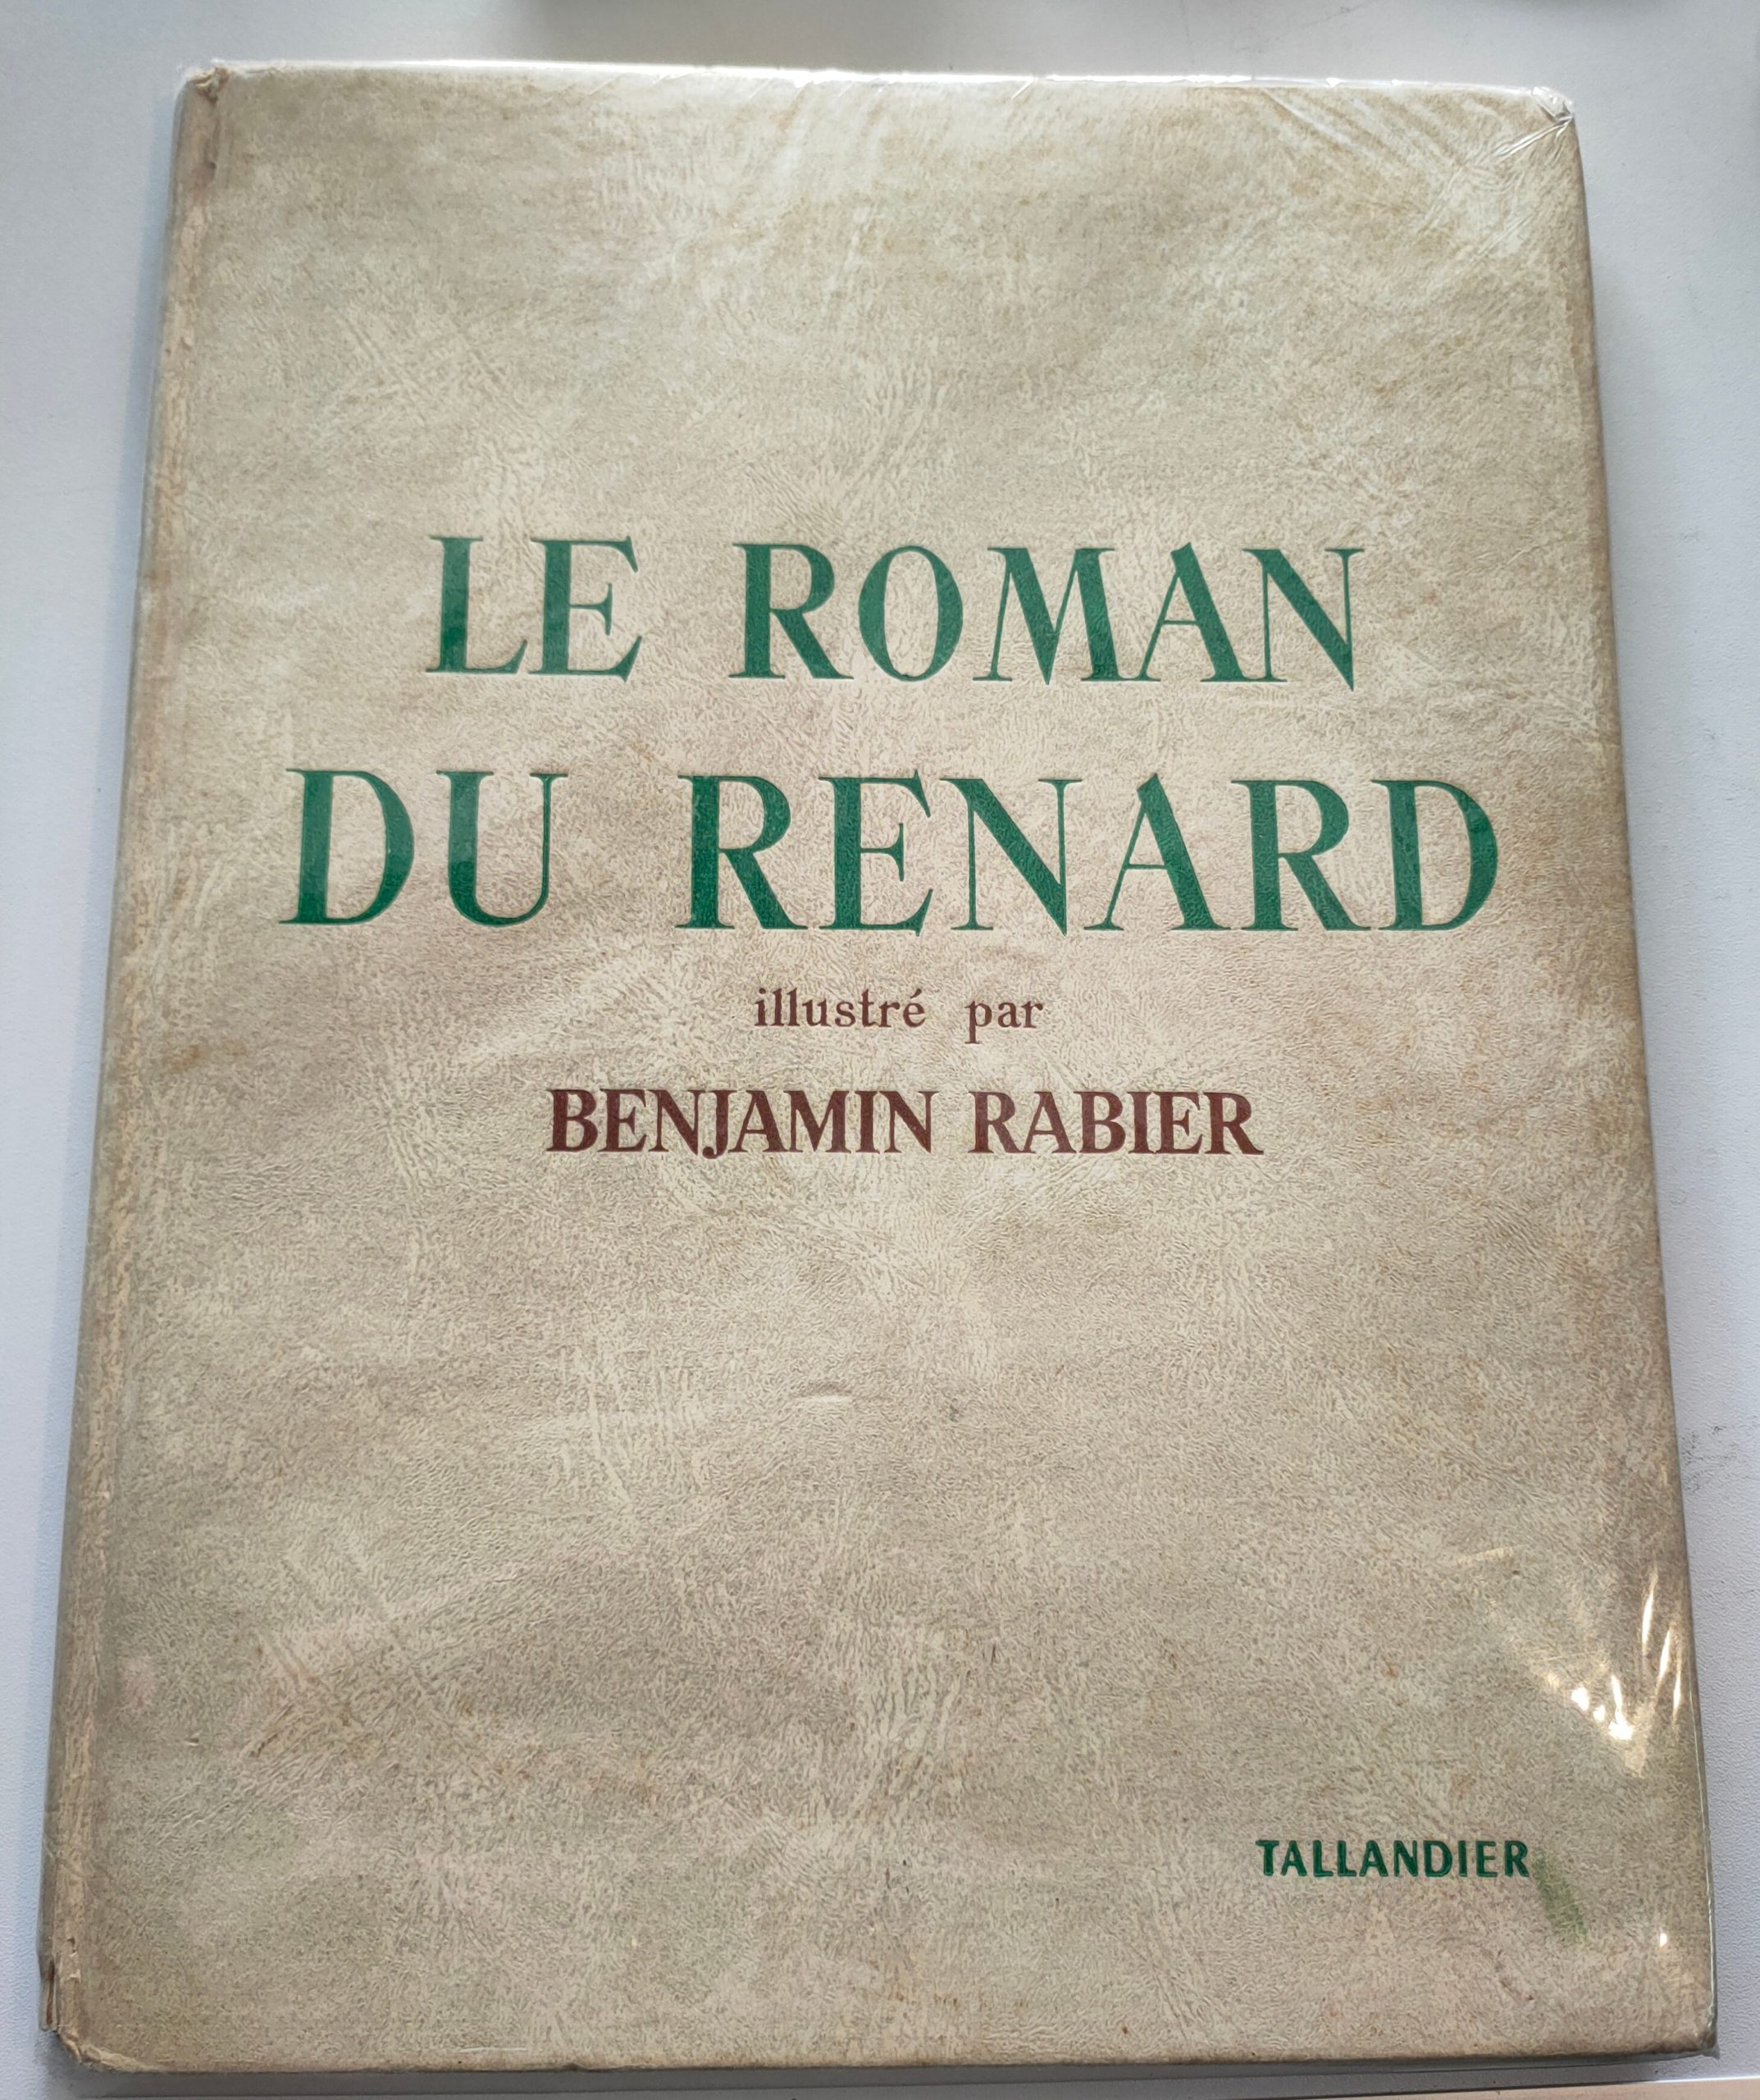 Featured image for “Le roman du renard illustré par Benjamin Rabier / Tallandier / 1955”